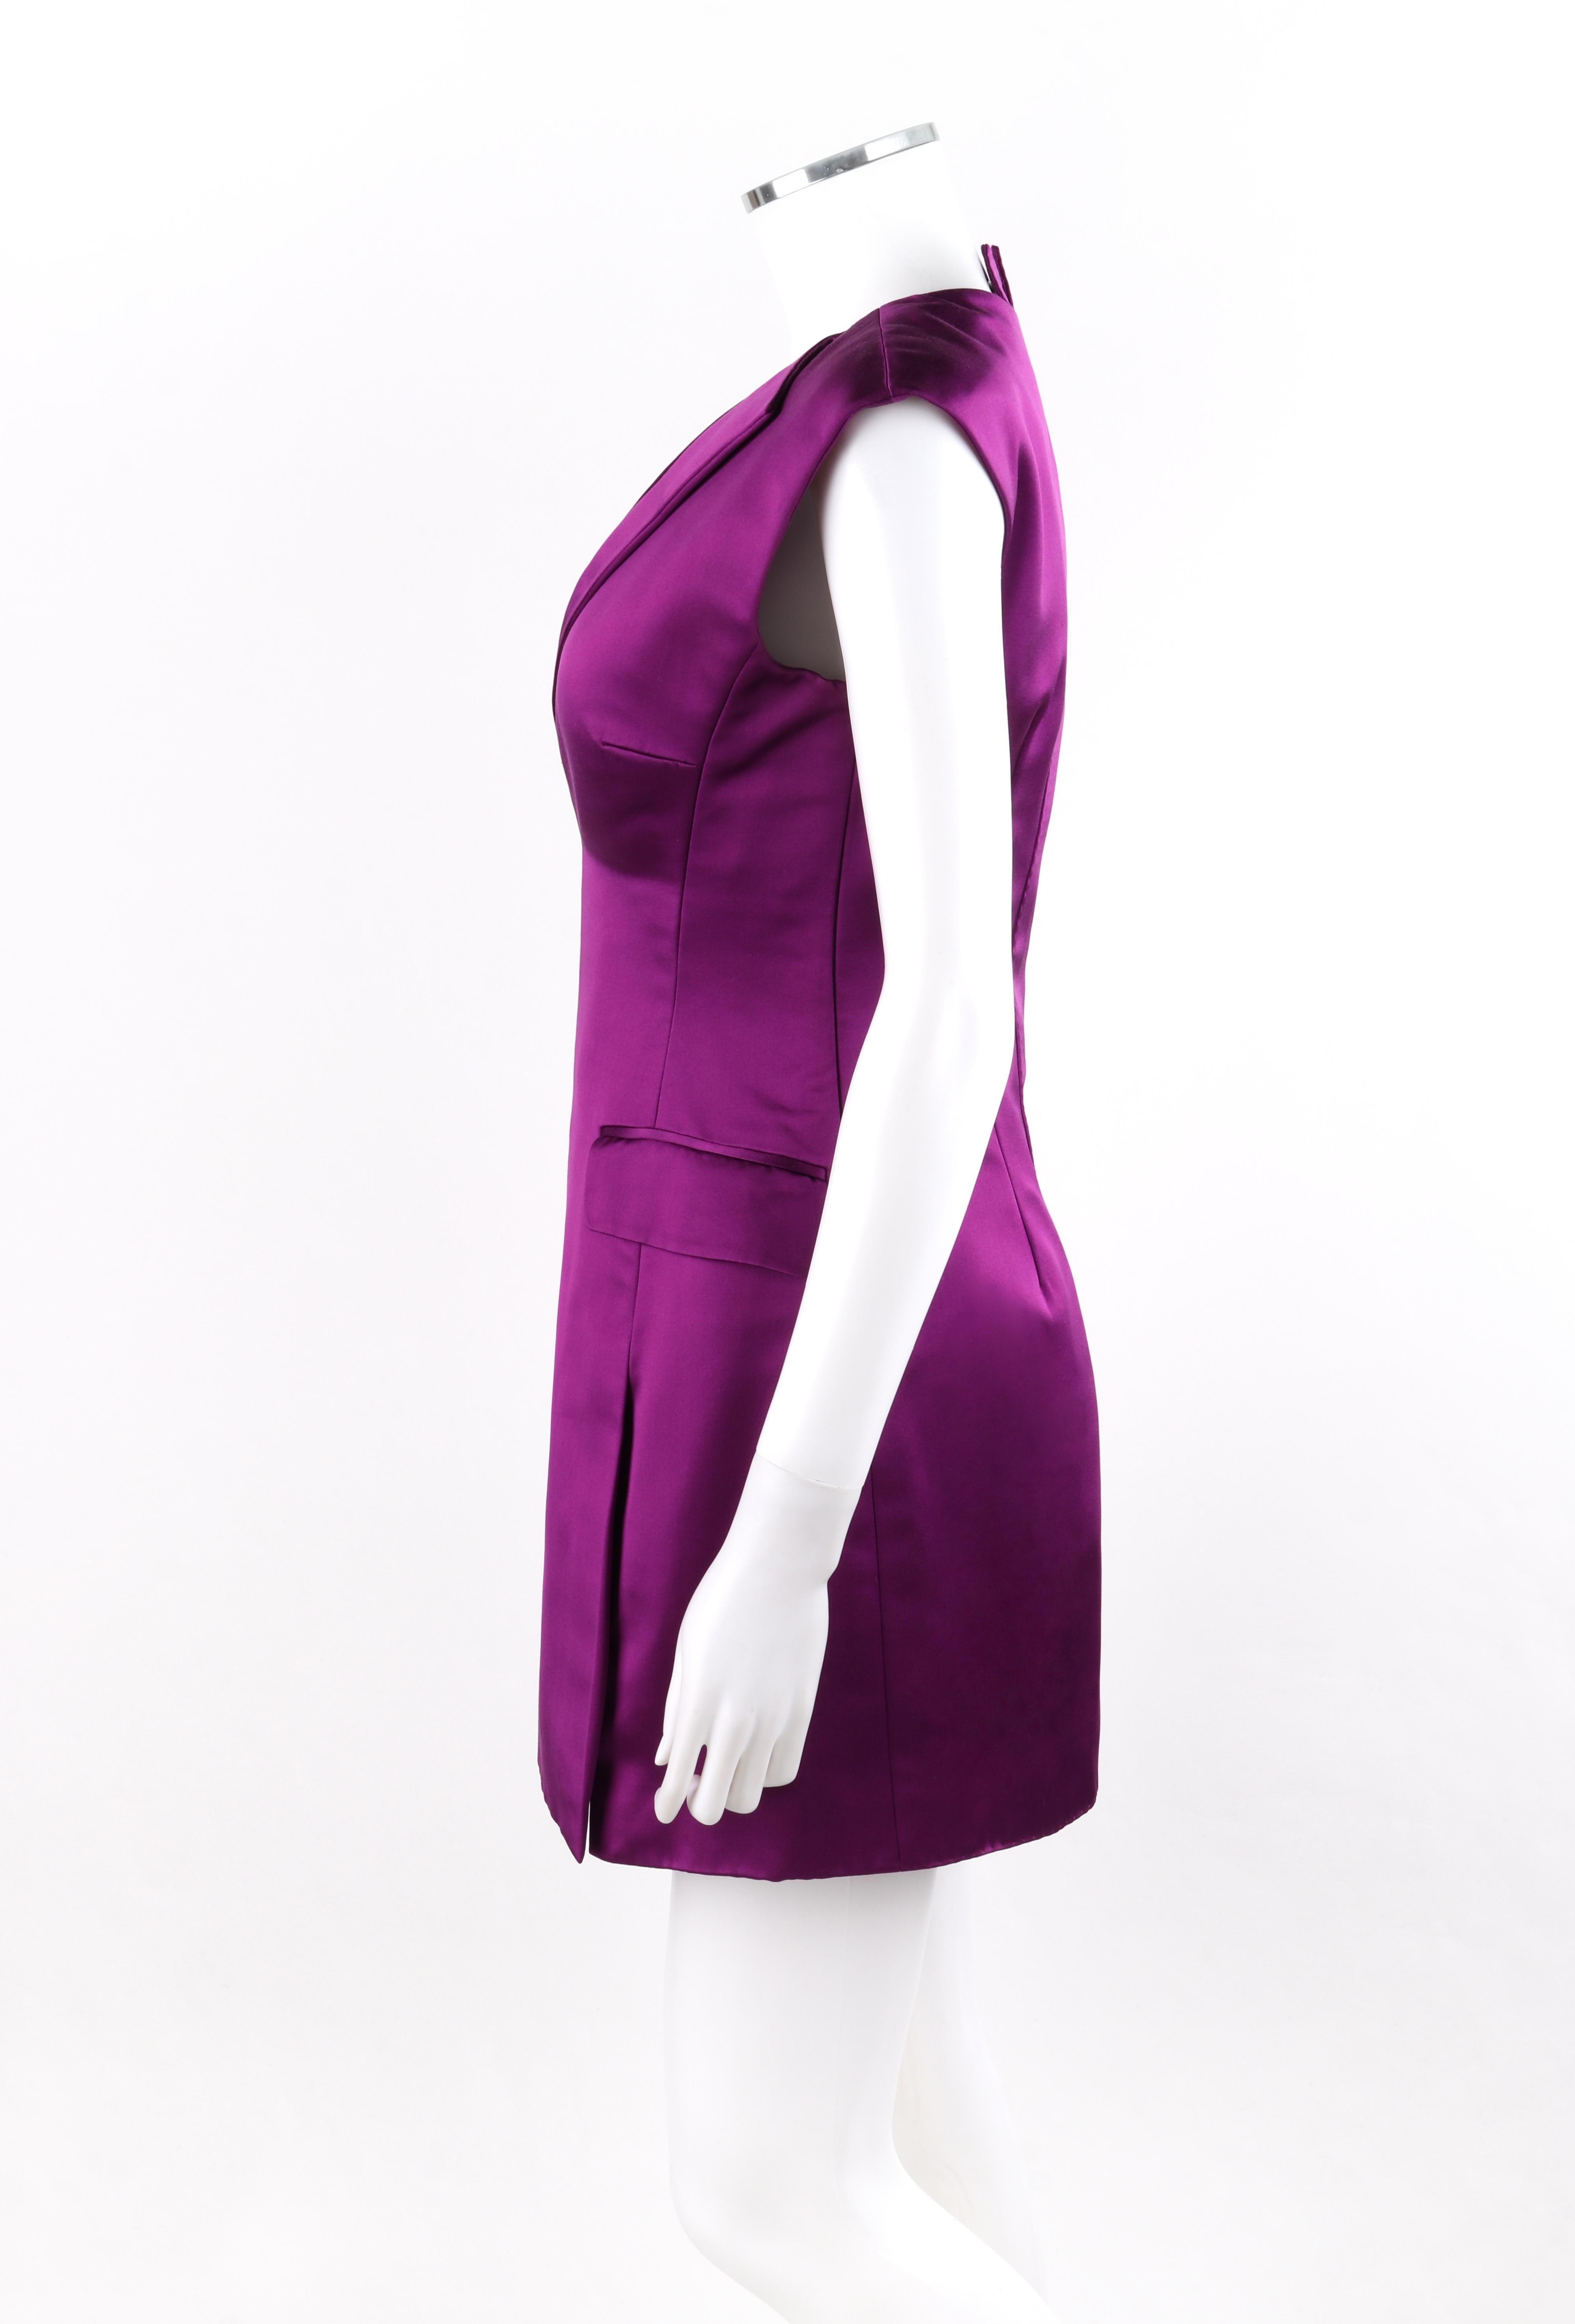 ALEXANDER McQUEEN S/S 2008 “La Dame Bleue” Purple Silk Fitted V Neck Mini Dress In Good Condition In Thiensville, WI